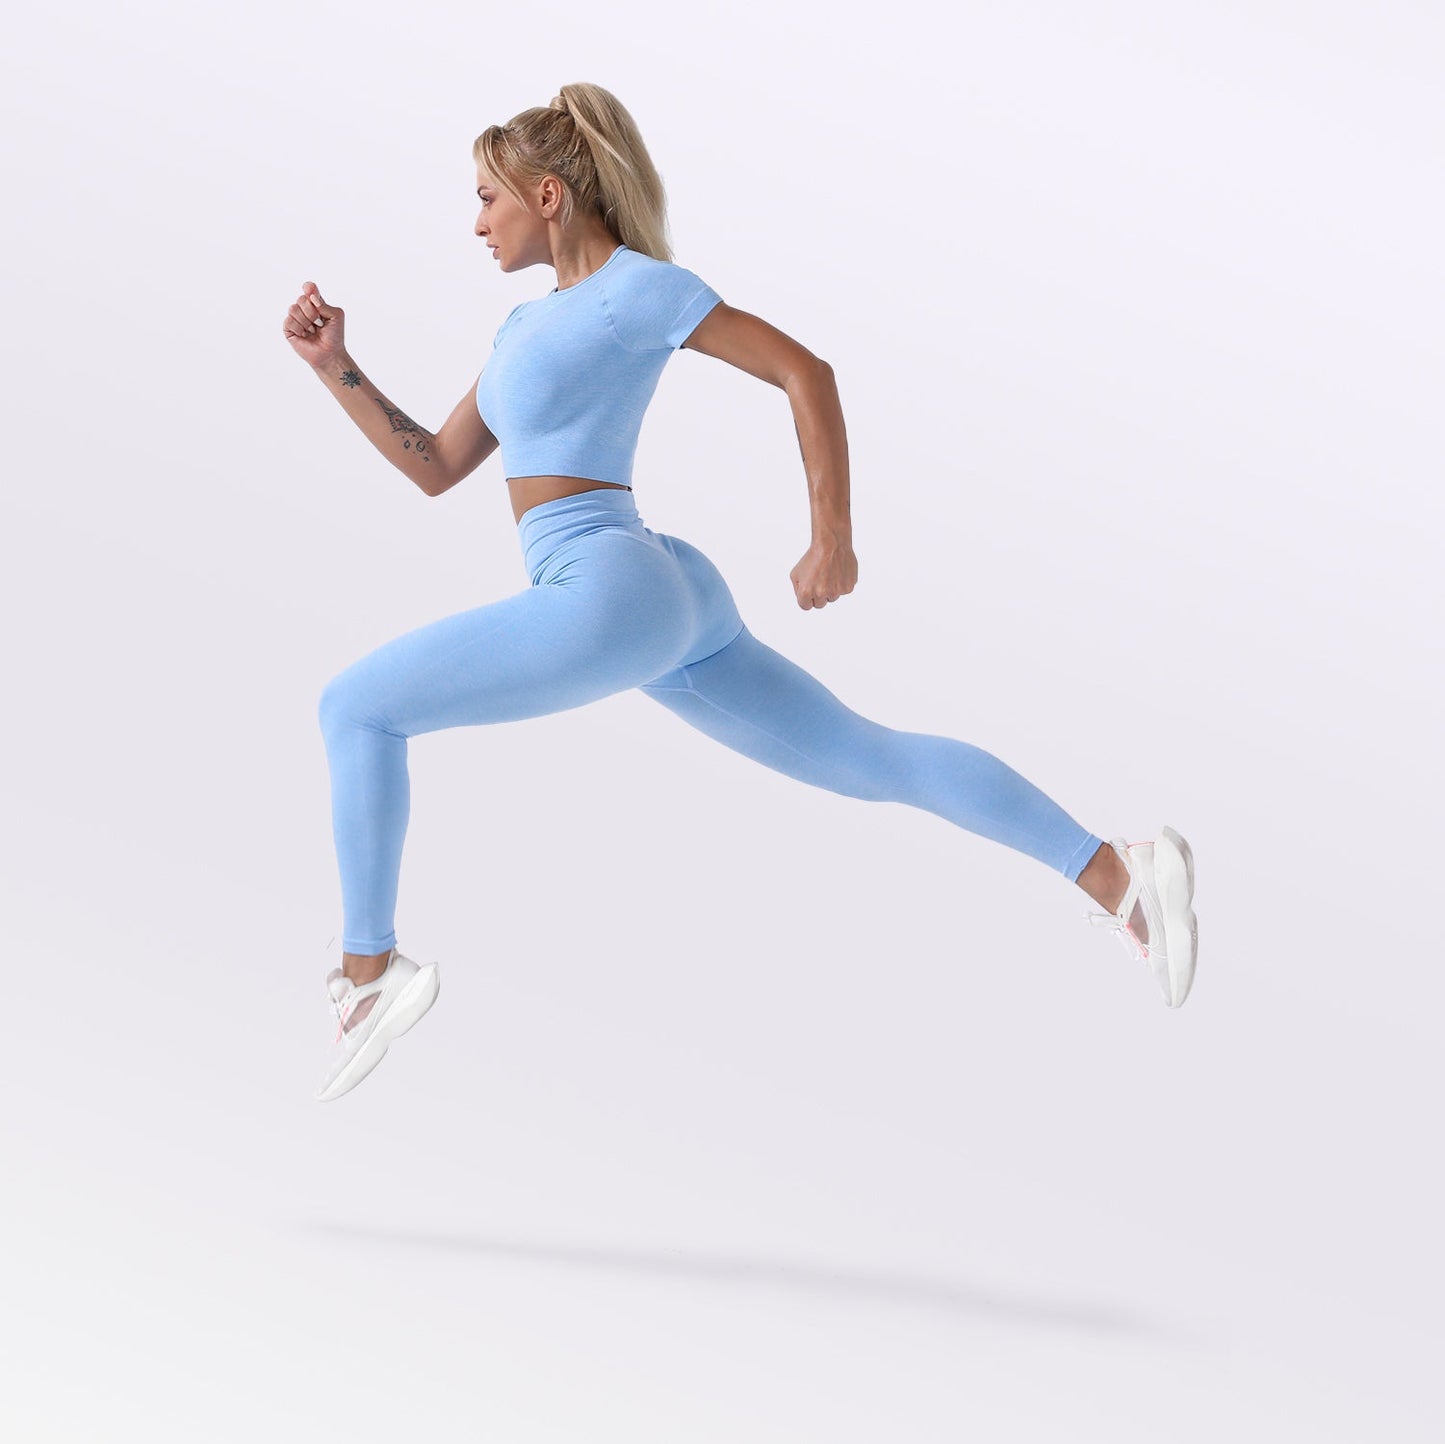 Seamless Gym Yoga Set Short Sleeve Top & Leggings for Women